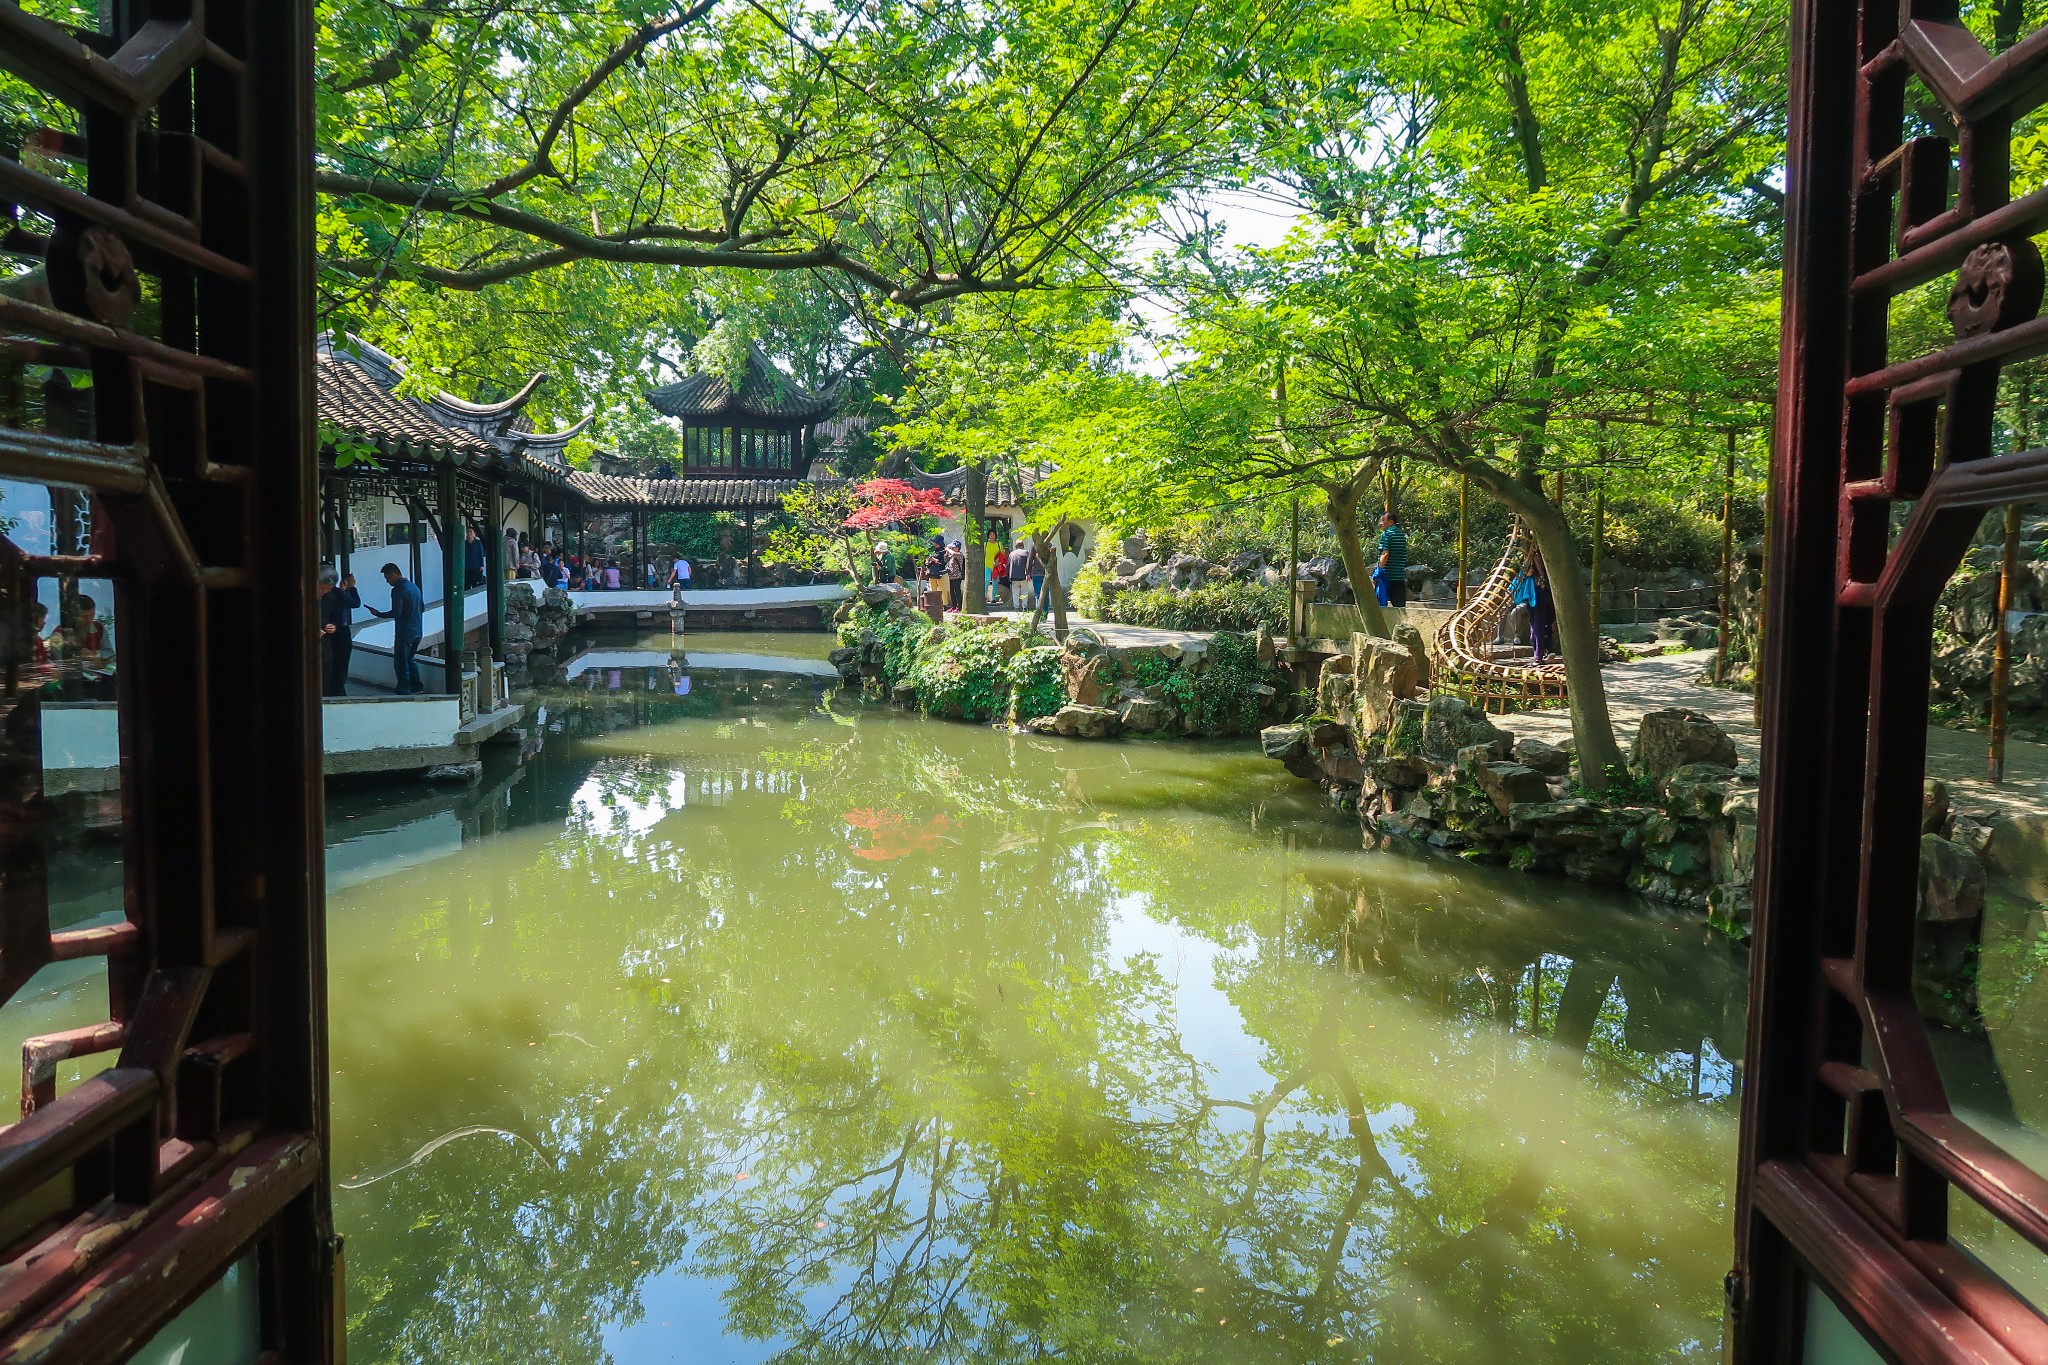 Suzhou The Humble Administrator's Garden